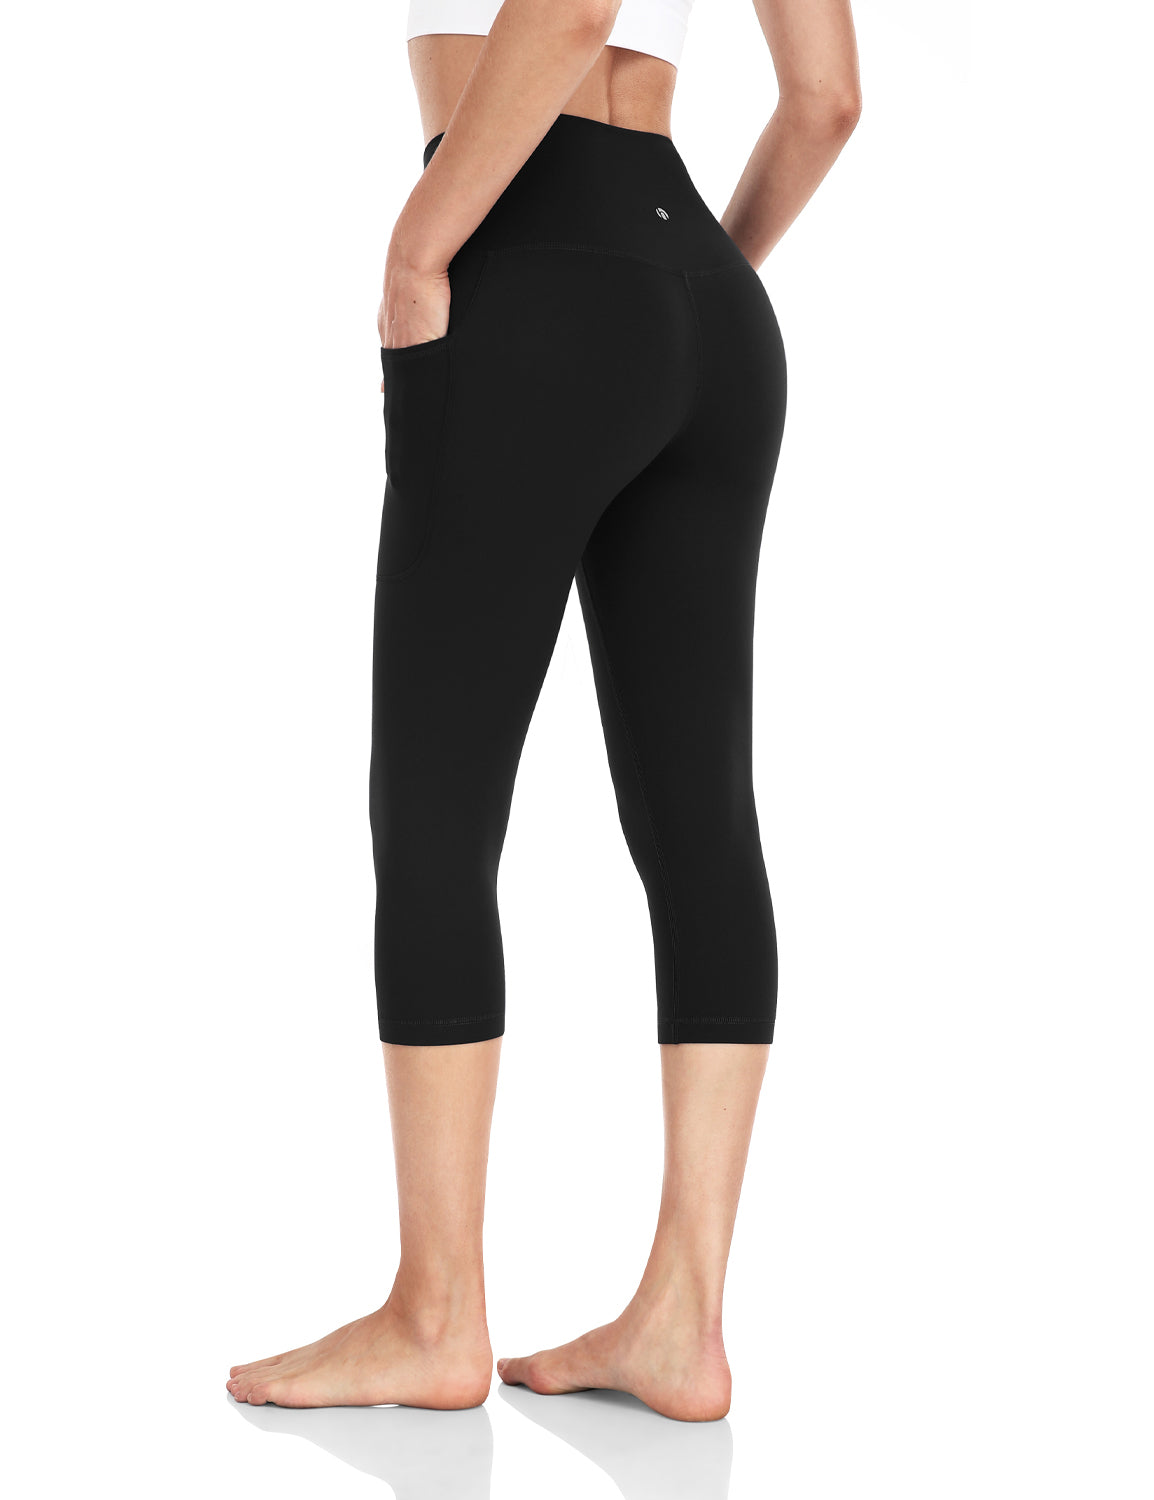 Athleta Black Capri Pants Size 2 Cinch Legs‎ Cargo Pocket Style #100303 | Black  capri pants, Capri pants, Pants for women